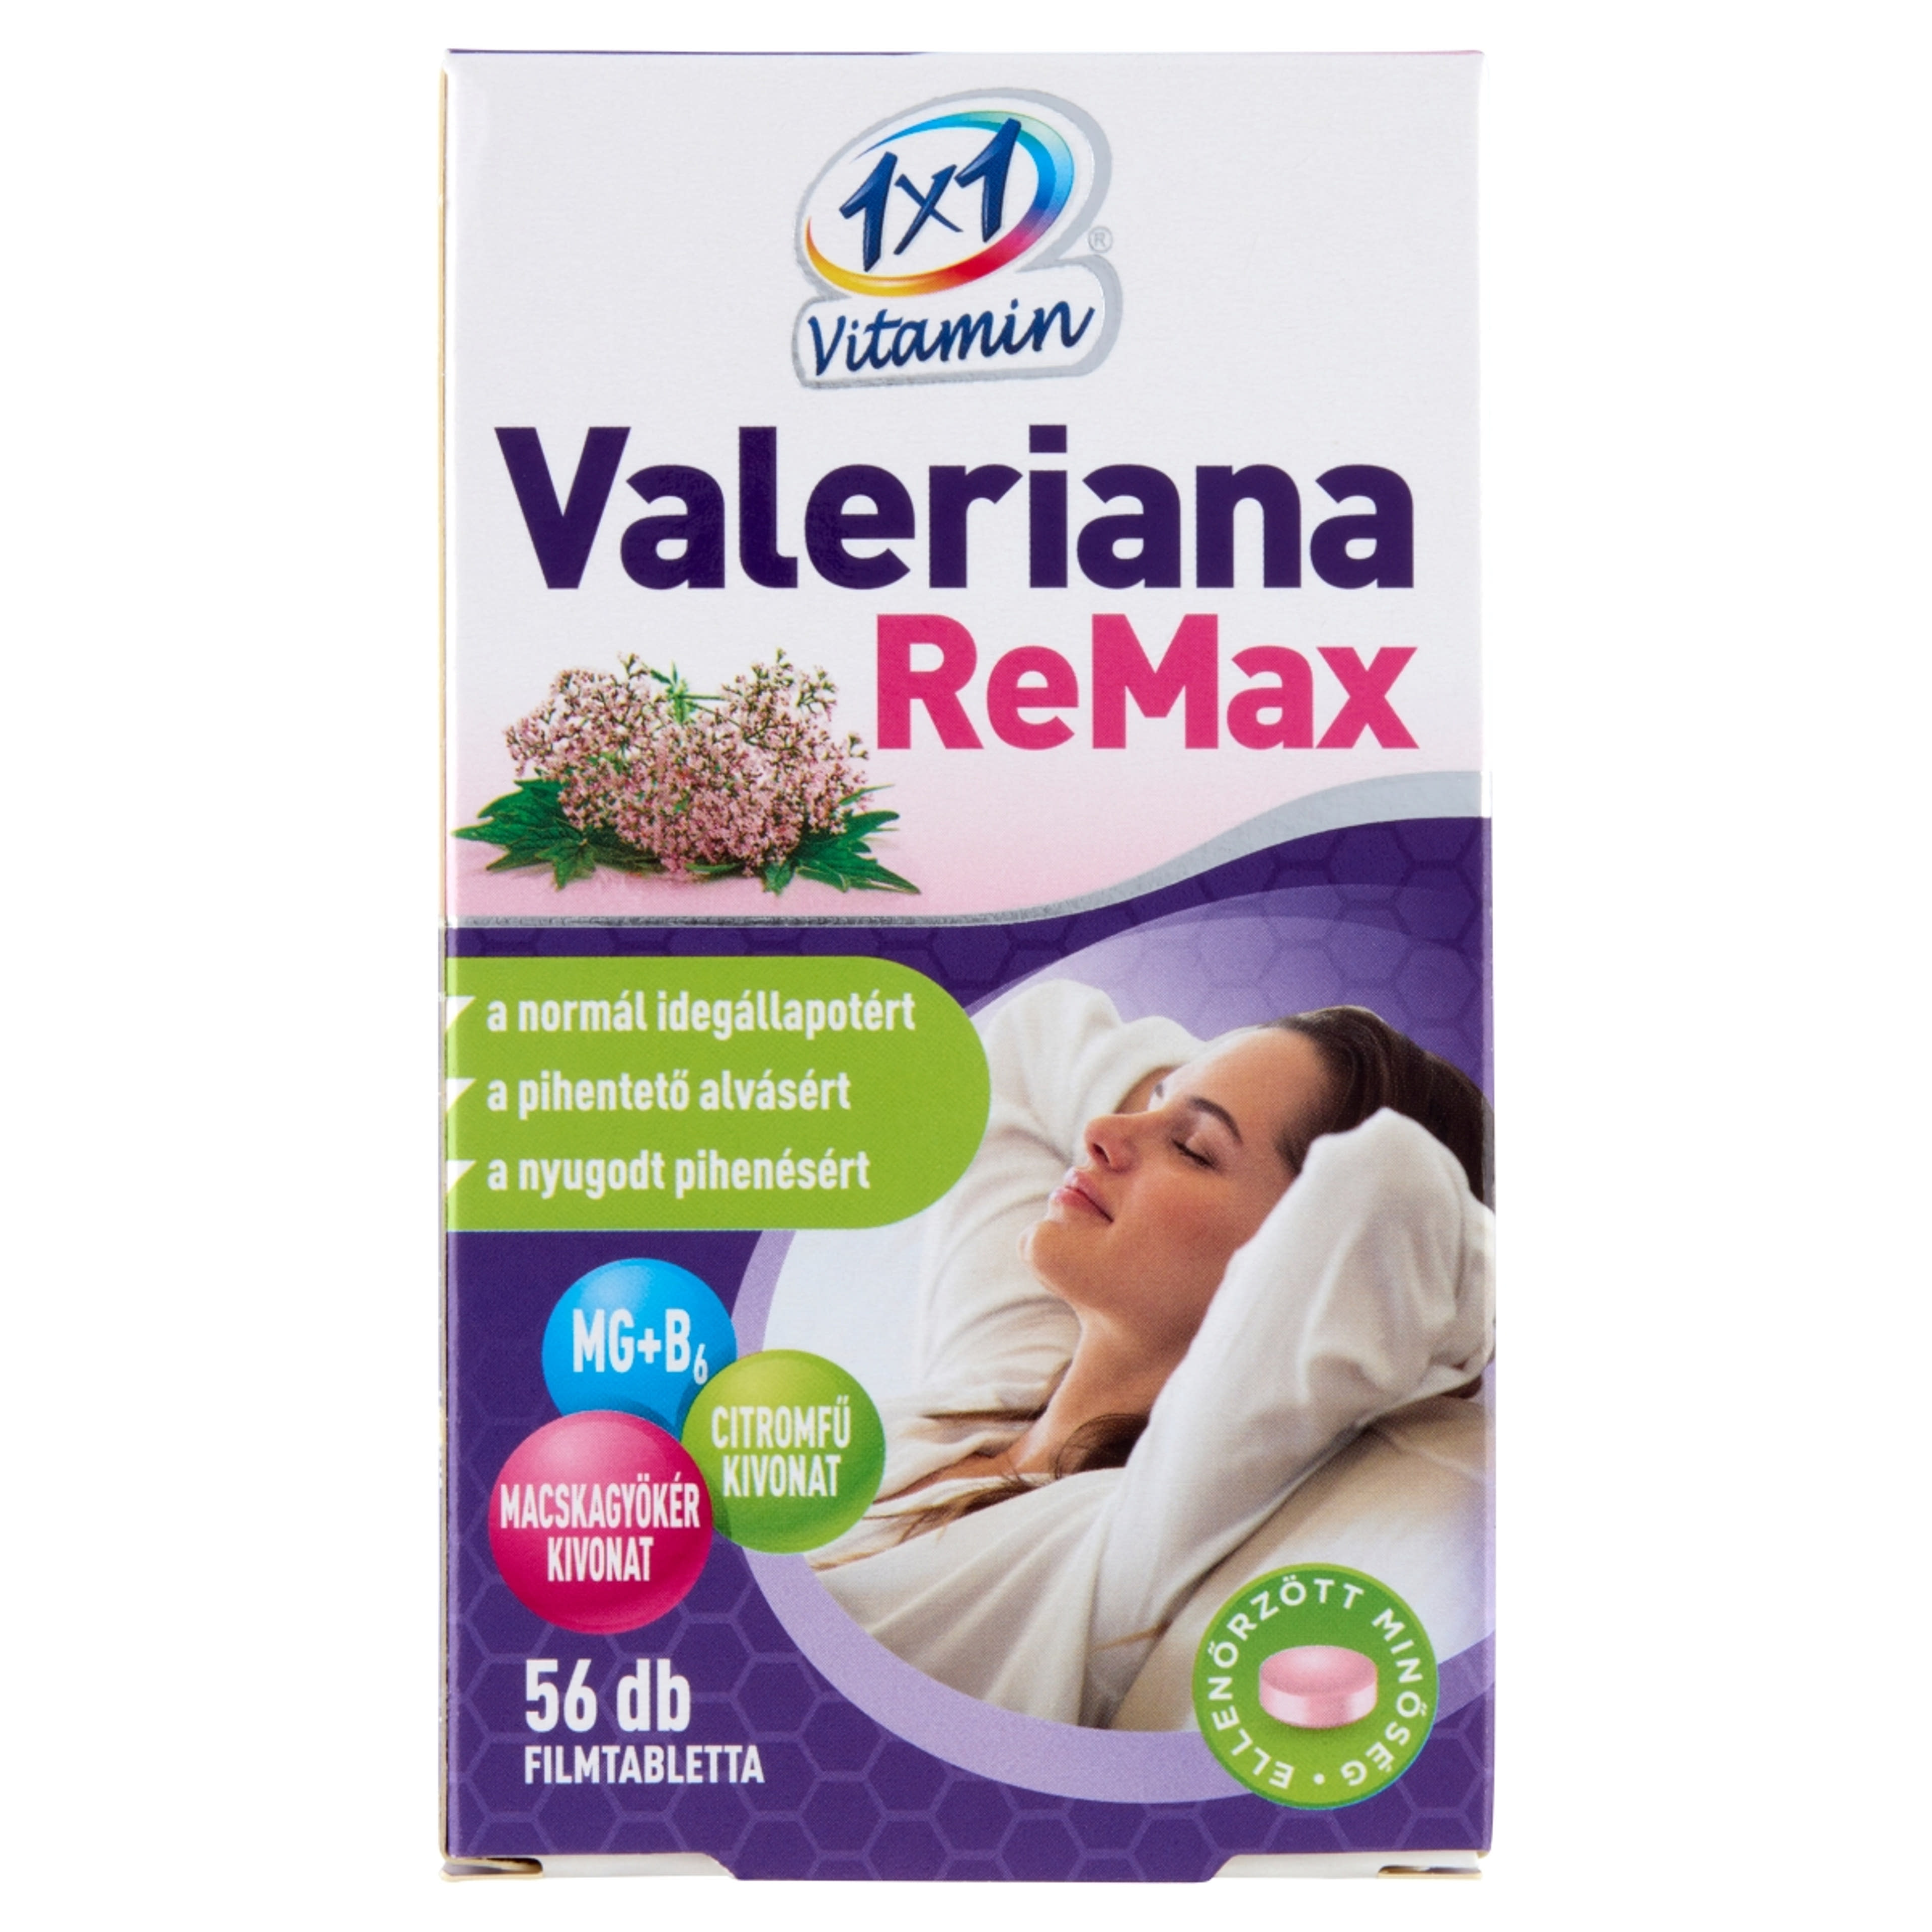 1x1 vitamin valeriana remax étrend-kiegészítő filmtabletta - 56 db-1